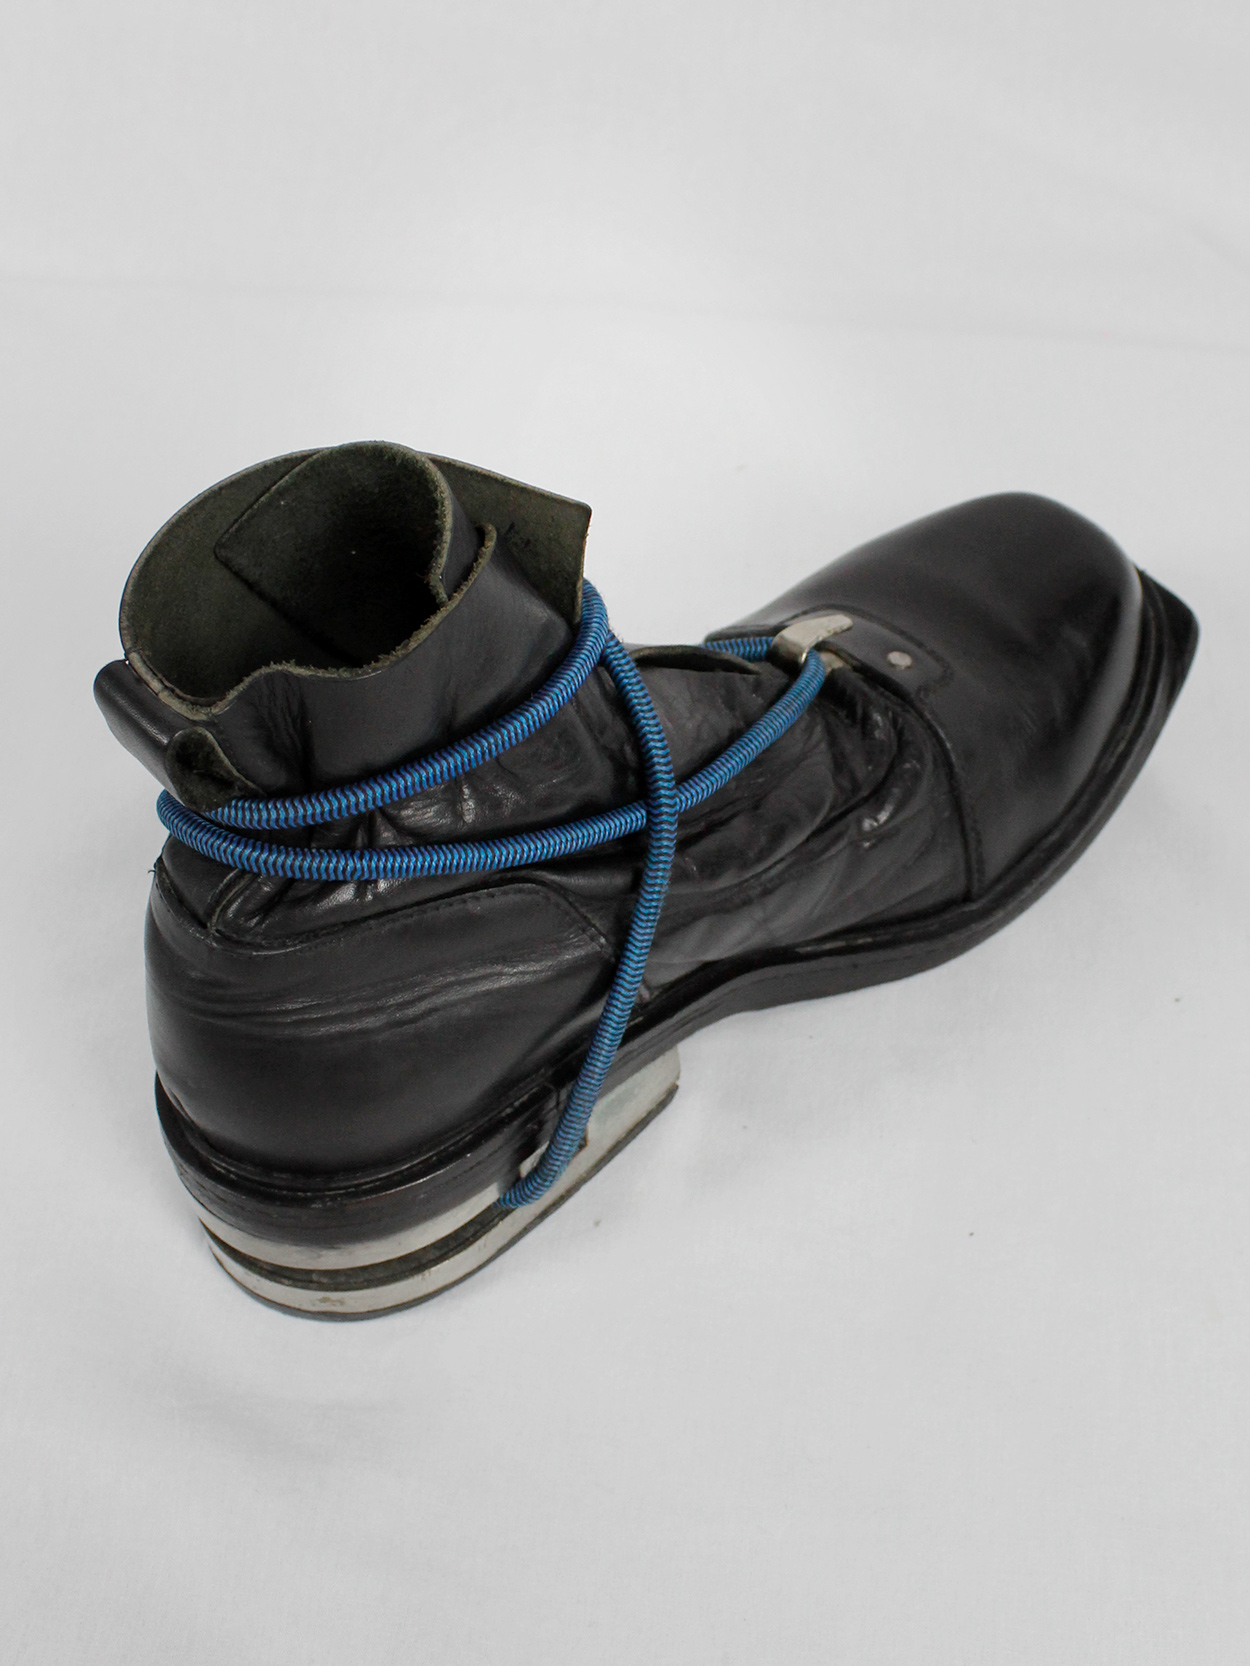 vaniitas Dirk Bikkembergs black mountaineering boots with metal heel and elastics fall 1996 (16)